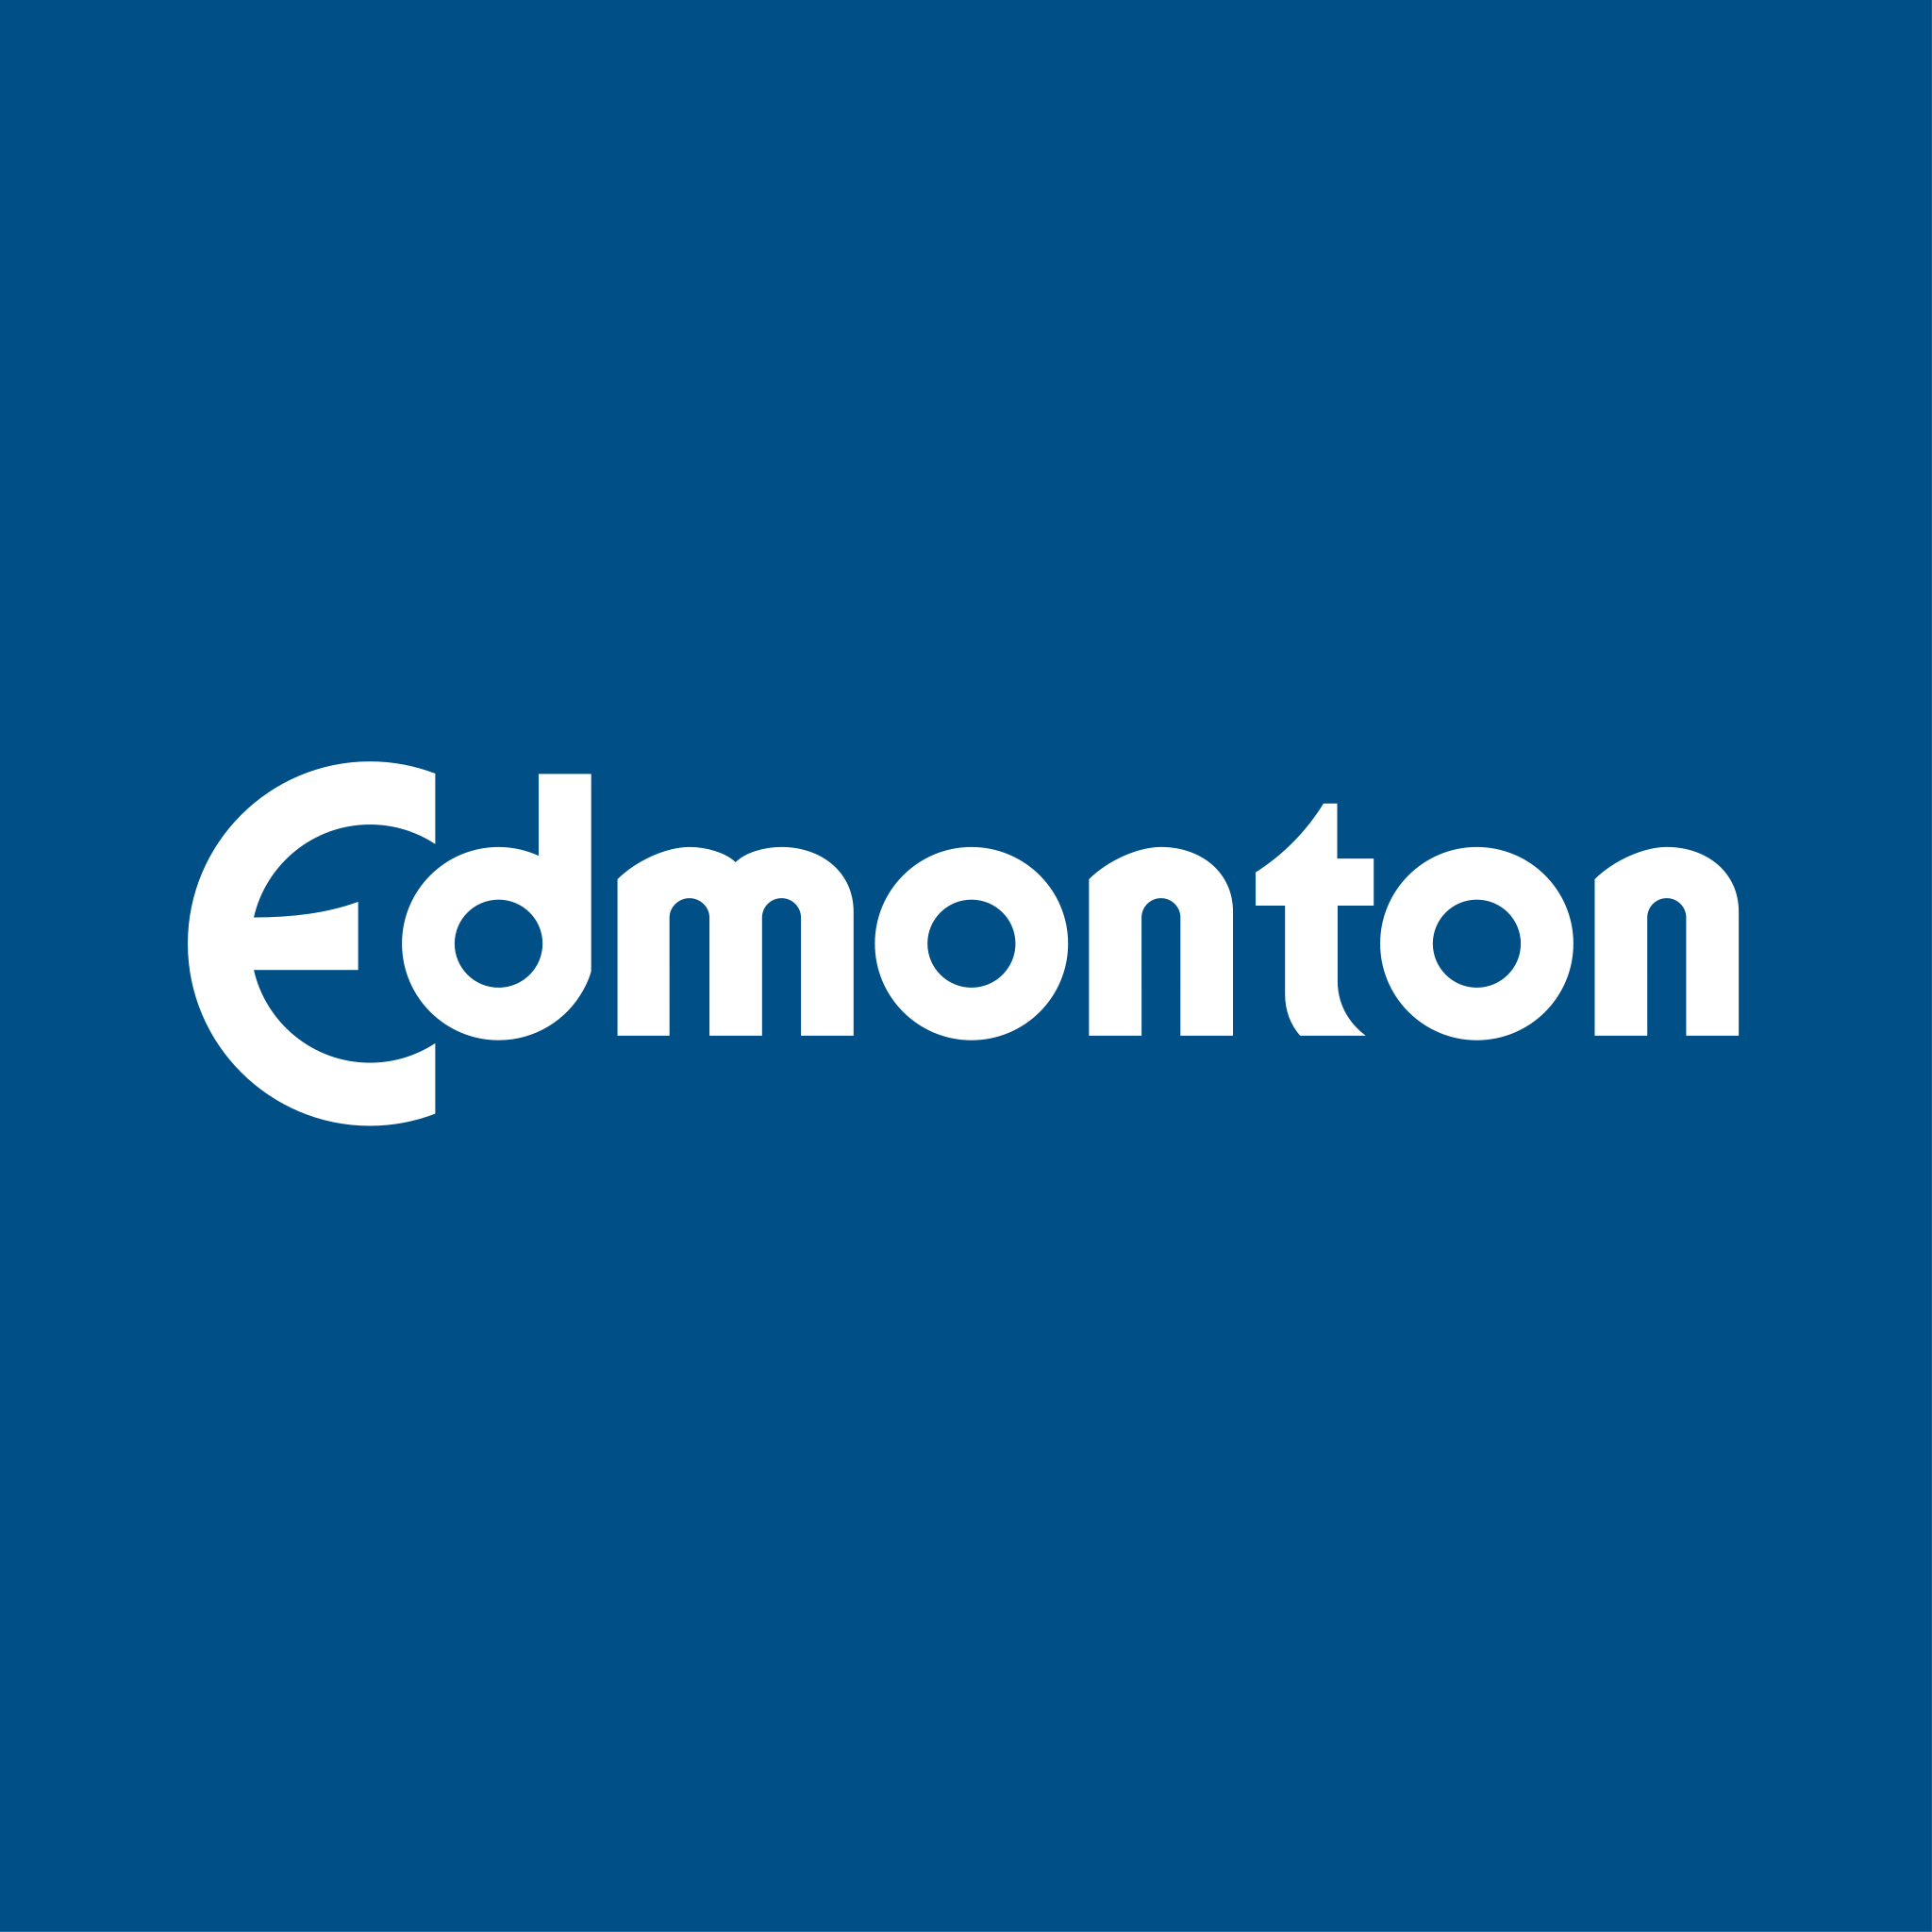 Edmonton_Square_Logo_(2022).svg.png